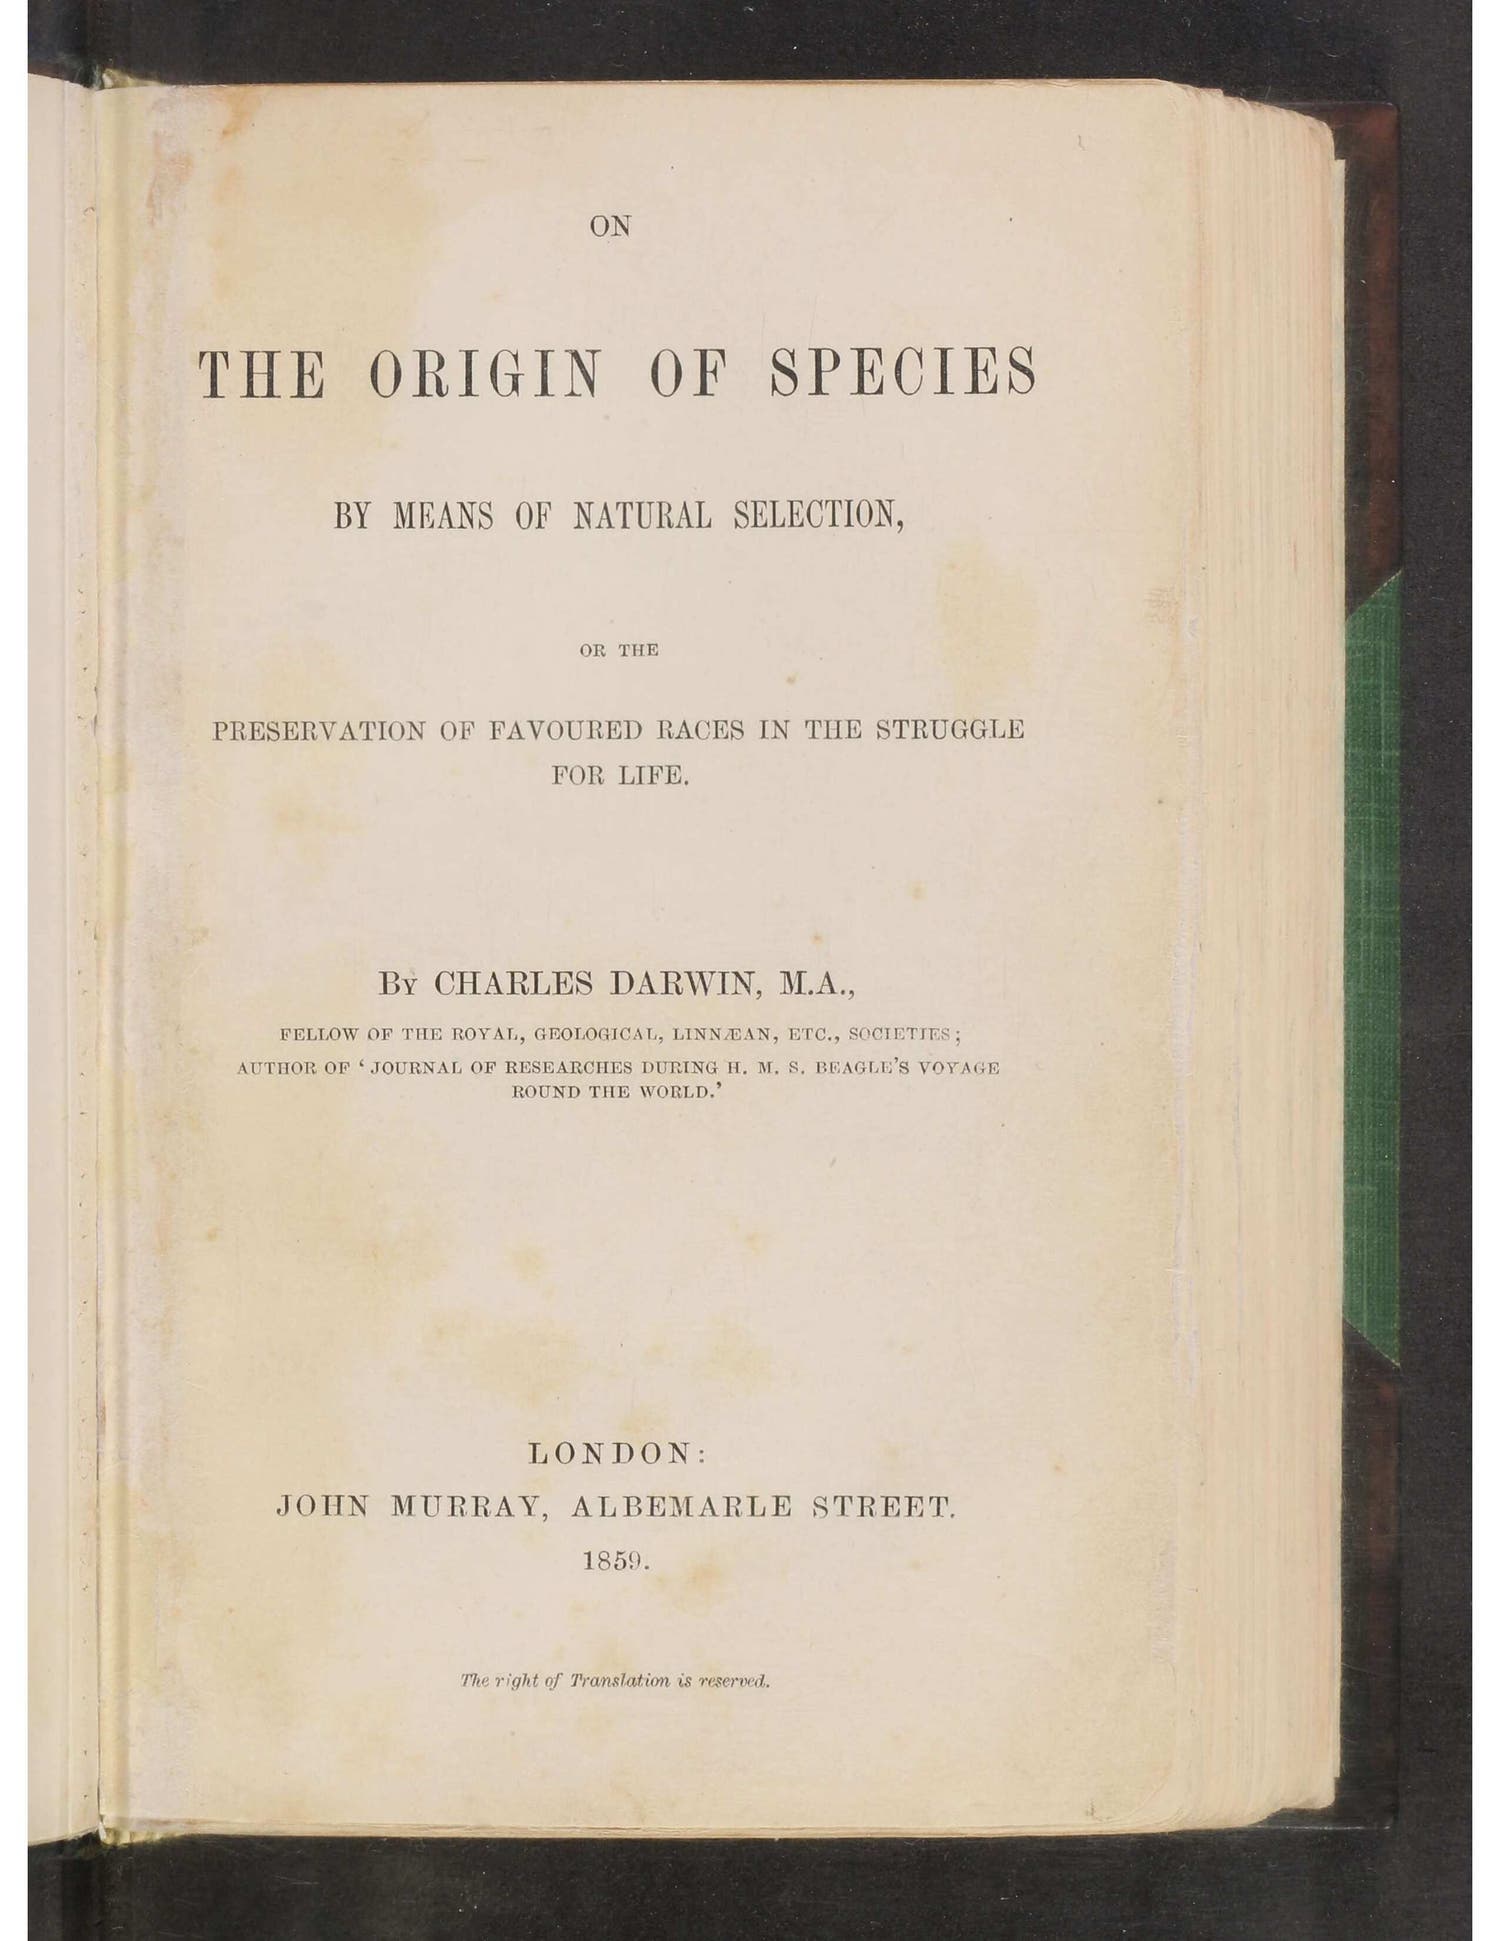 Charles Darwin, On the Origin of Species, London, 1859 (Linda Hall Library)